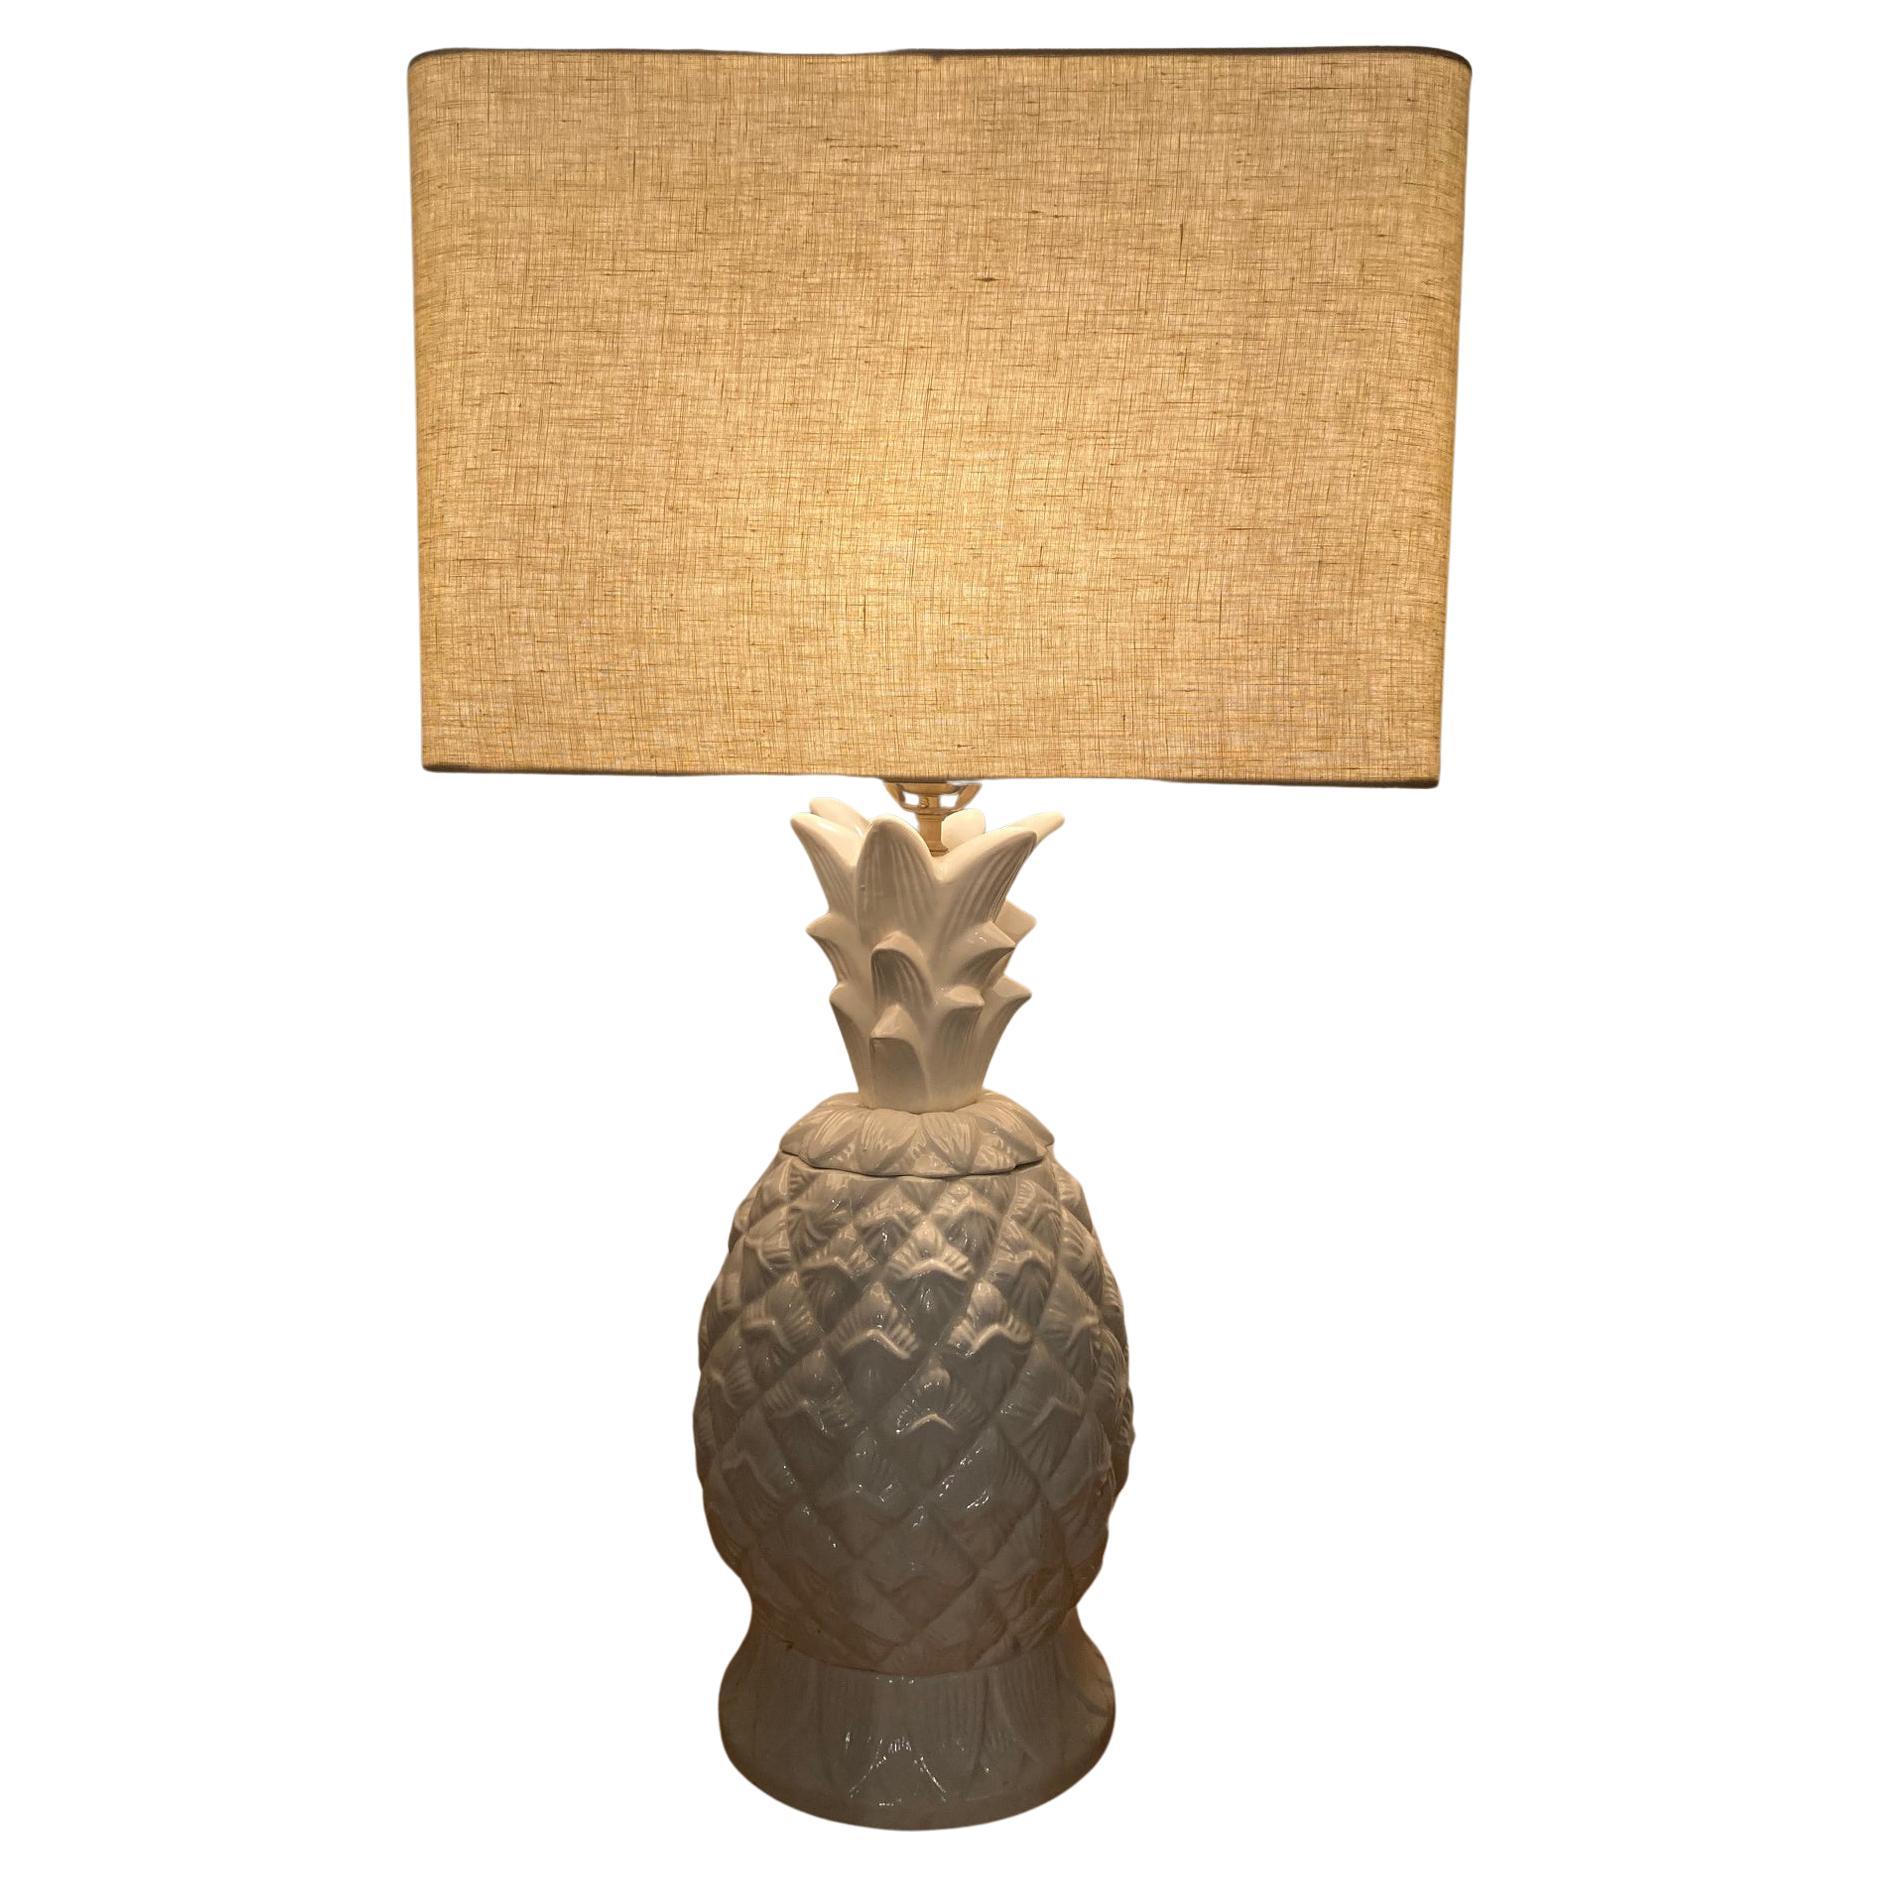 Vintage Pineapple Table Lamp